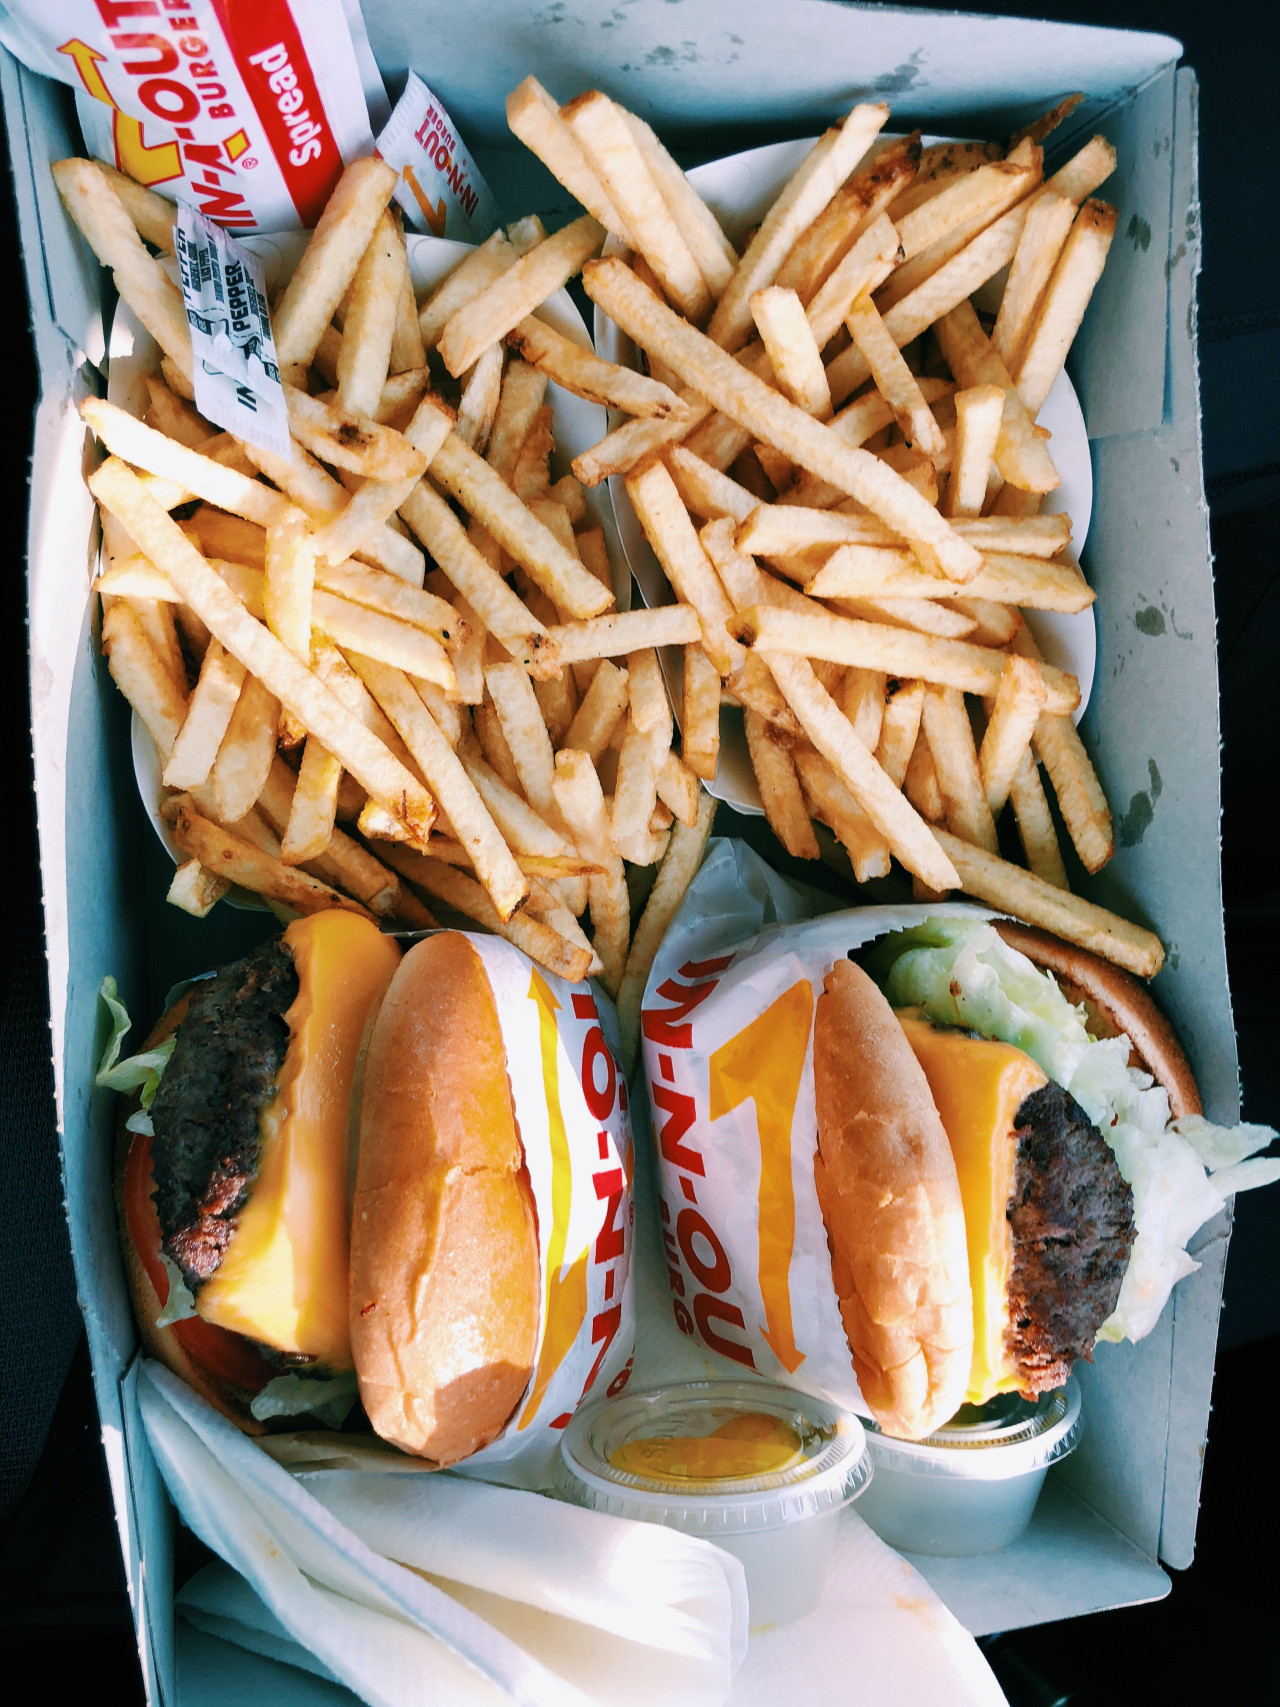 Ultraprocesados, comida chatarra, hamburguesa. Foto Unsplash.